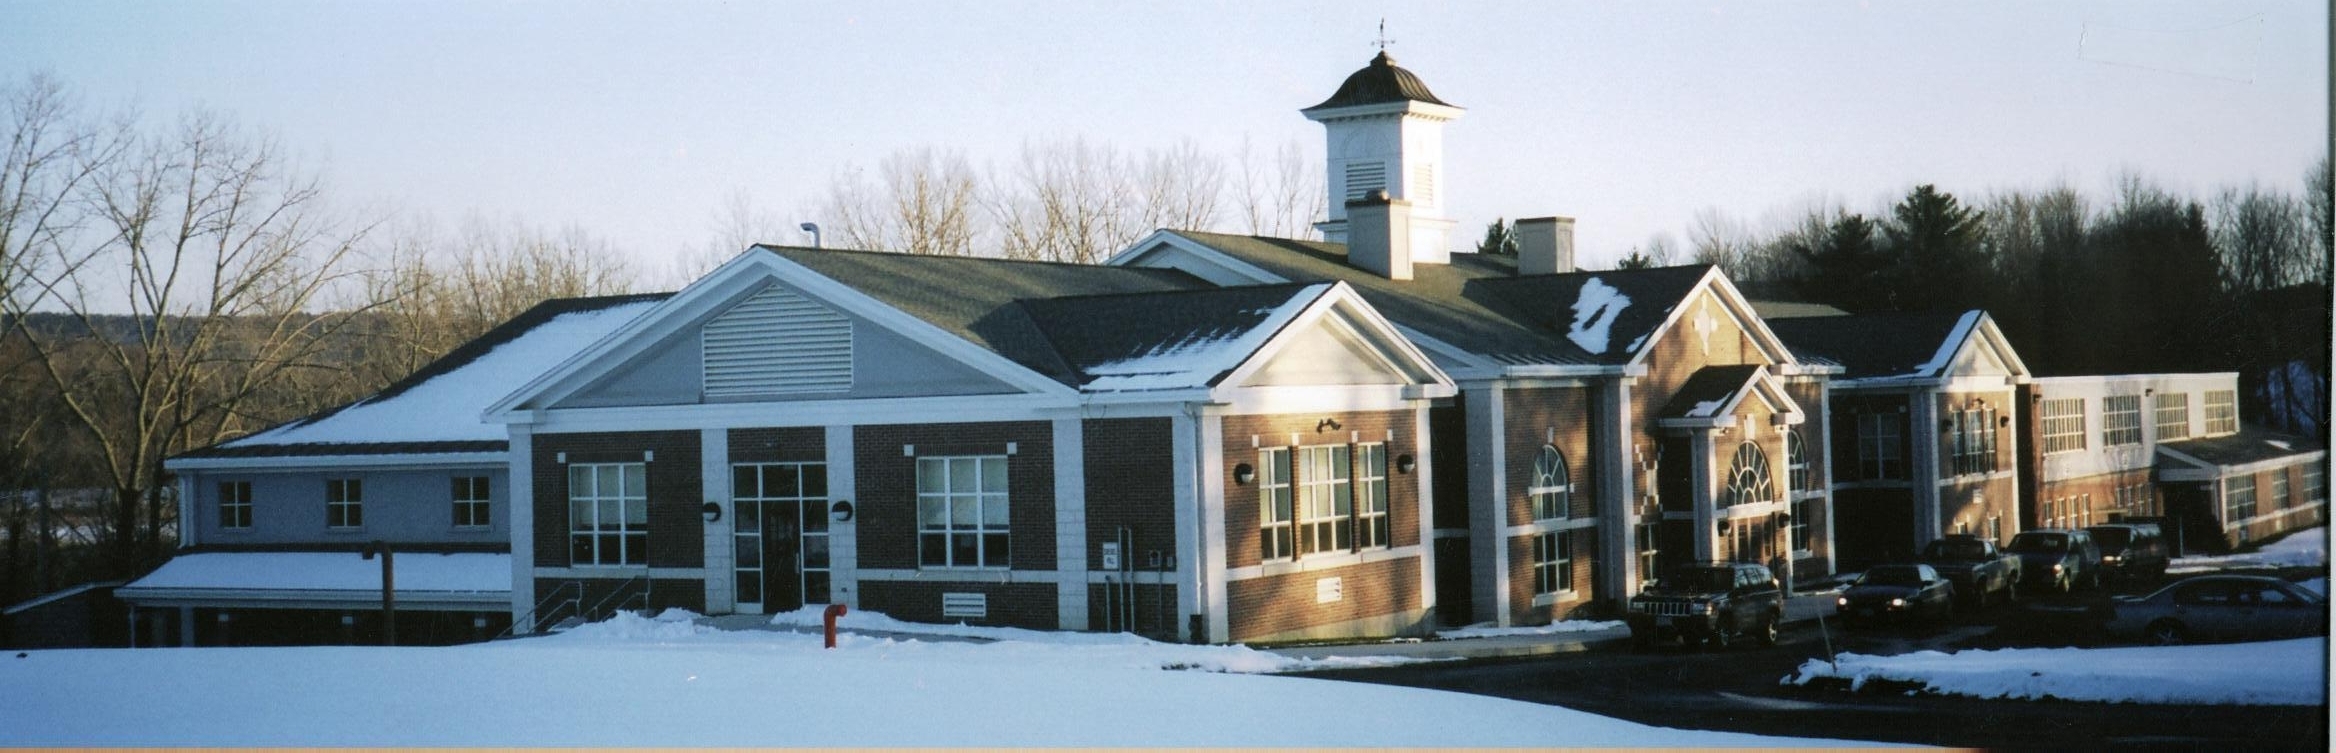  The Richmond School, Richmond, Massachusetts 